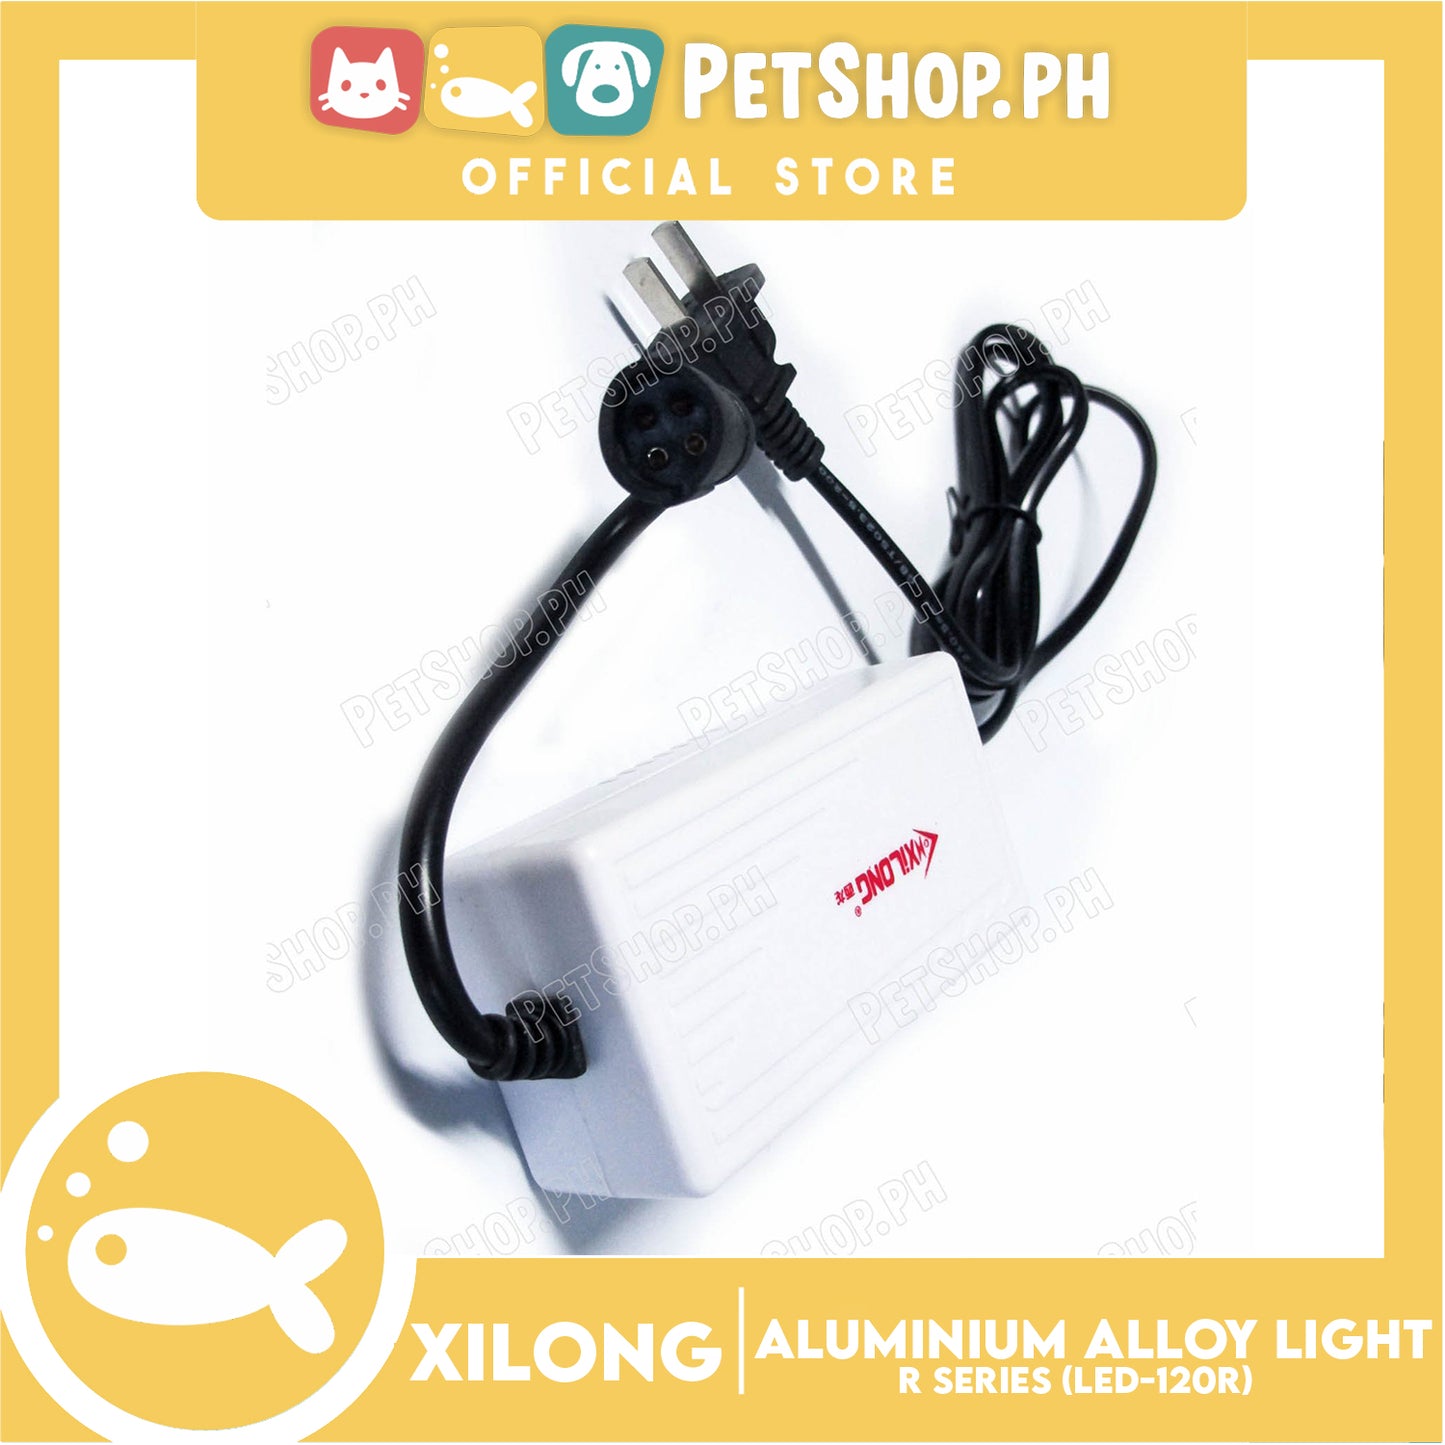 LED-120R Alloy Alum Bracket Light 41w